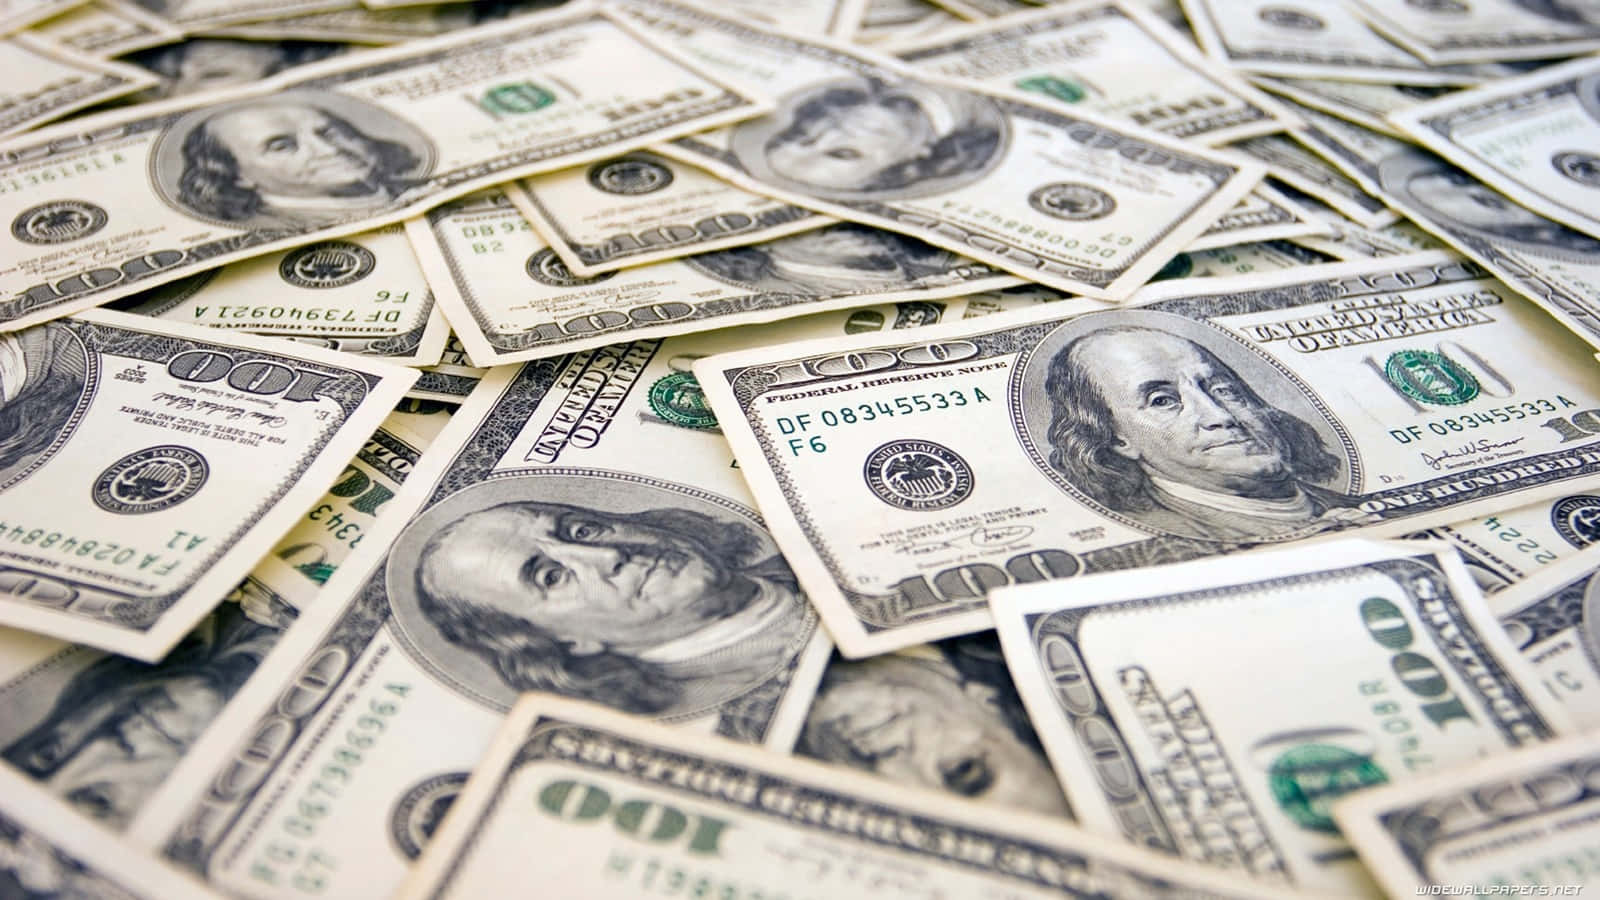 Vibrant High Resolution Picture of U.S. Dollar Bills